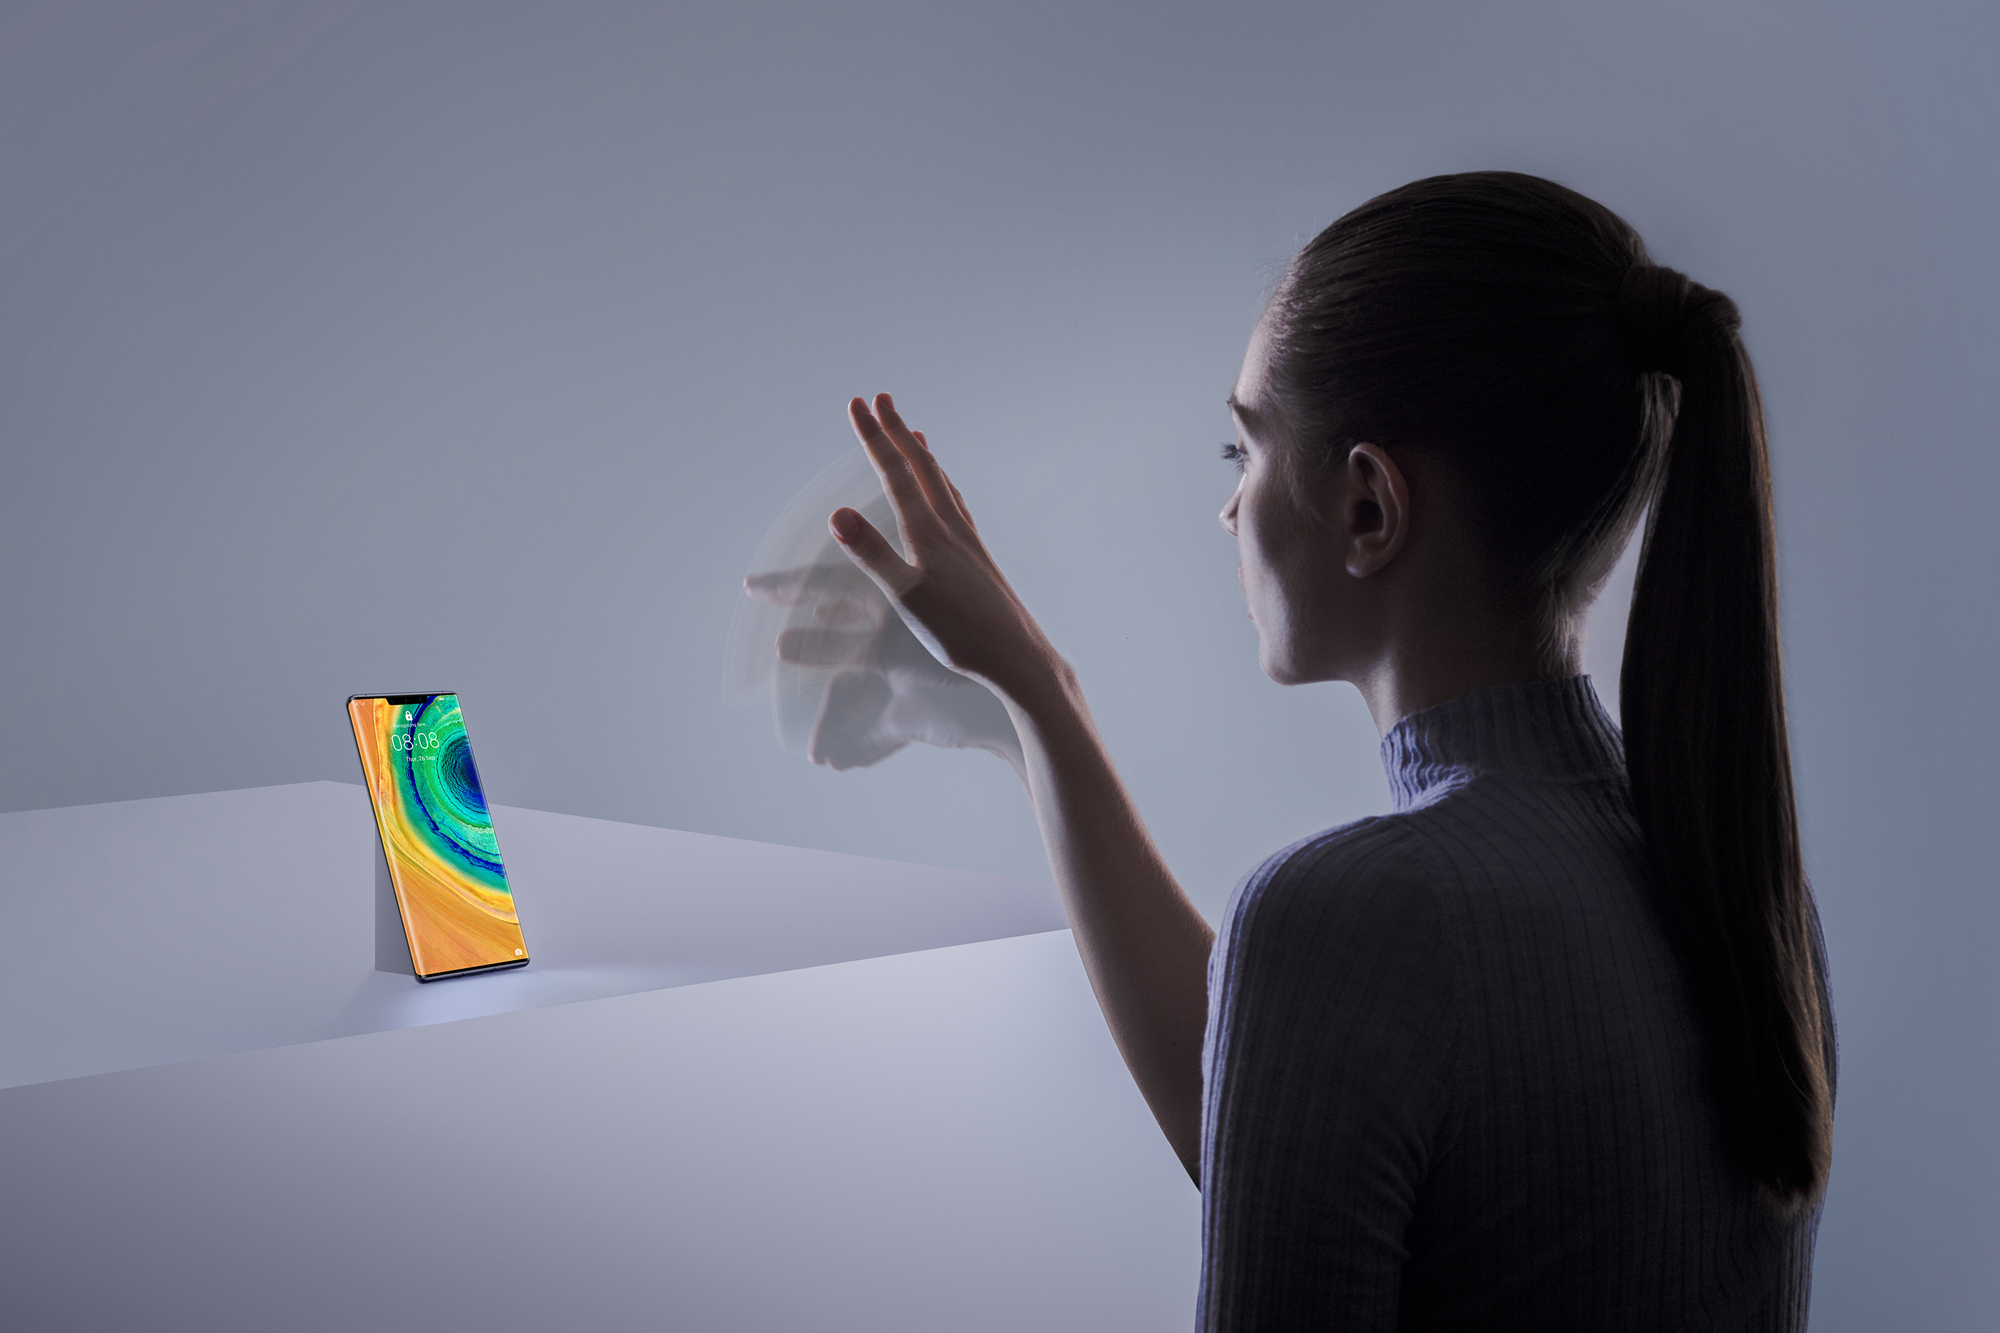 Huawei presenta el Mate 30, su primer smartphone post Google